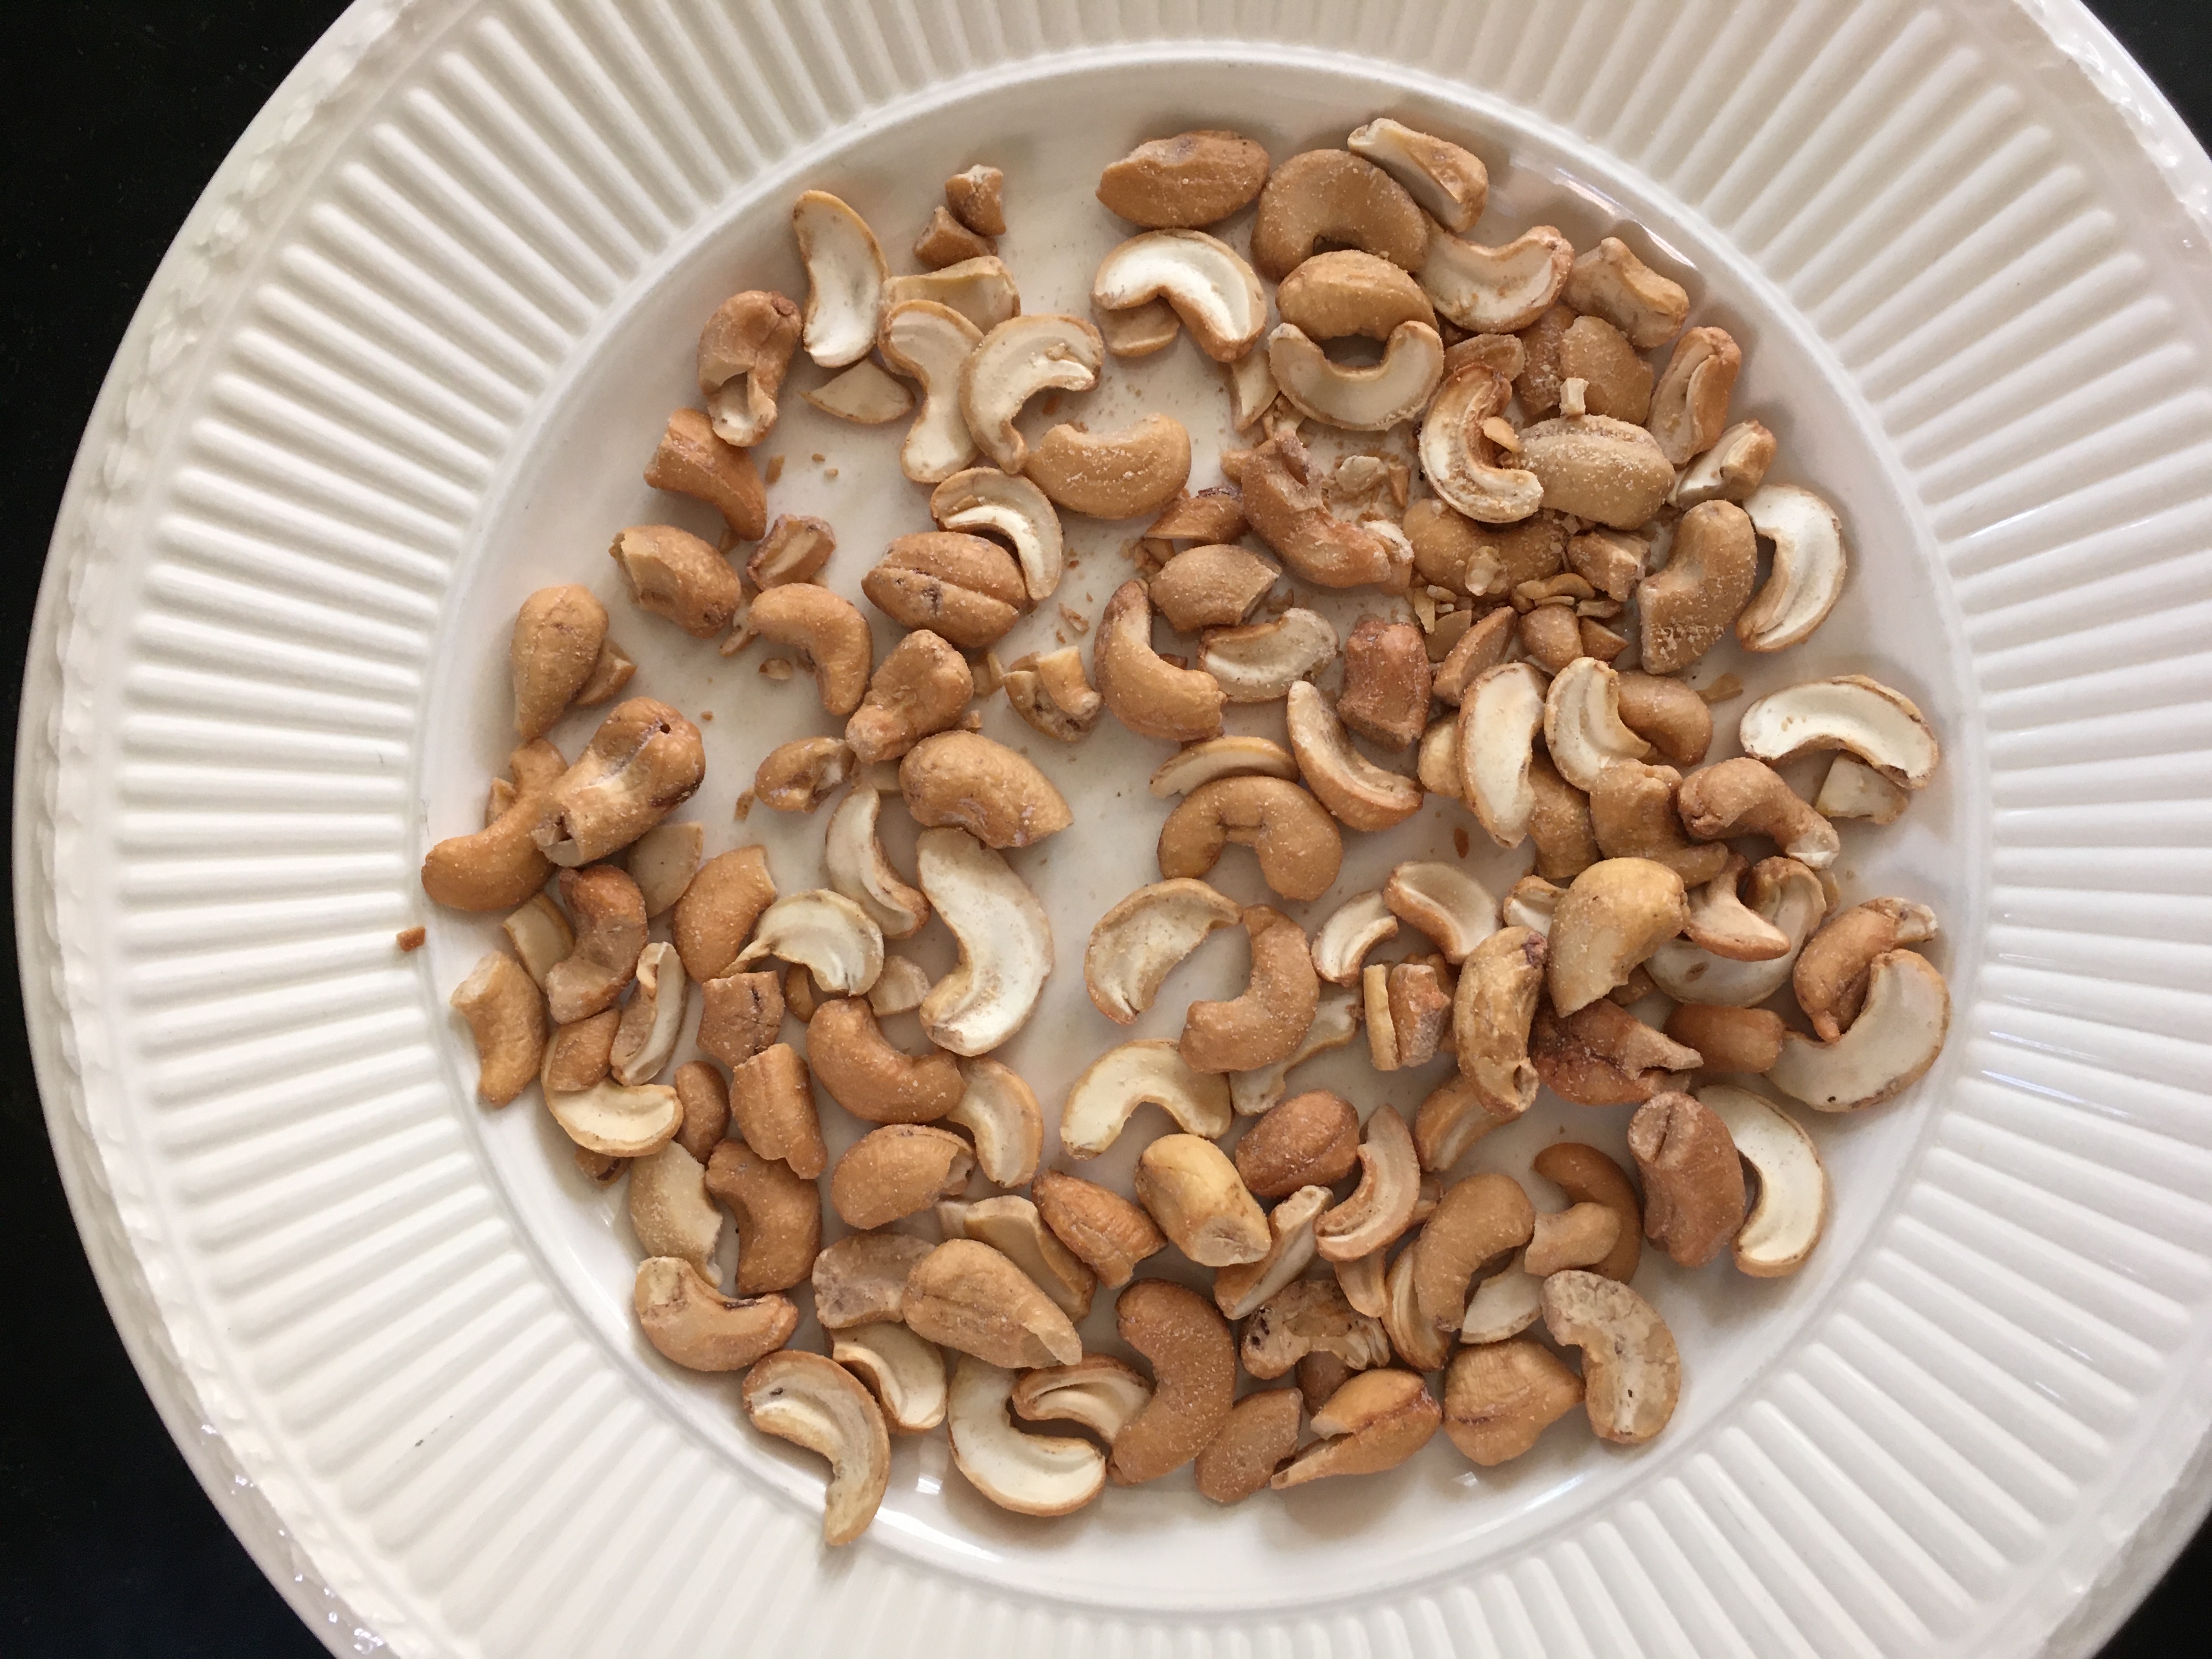 Trader Joe's partial cashews, halves, and pieces